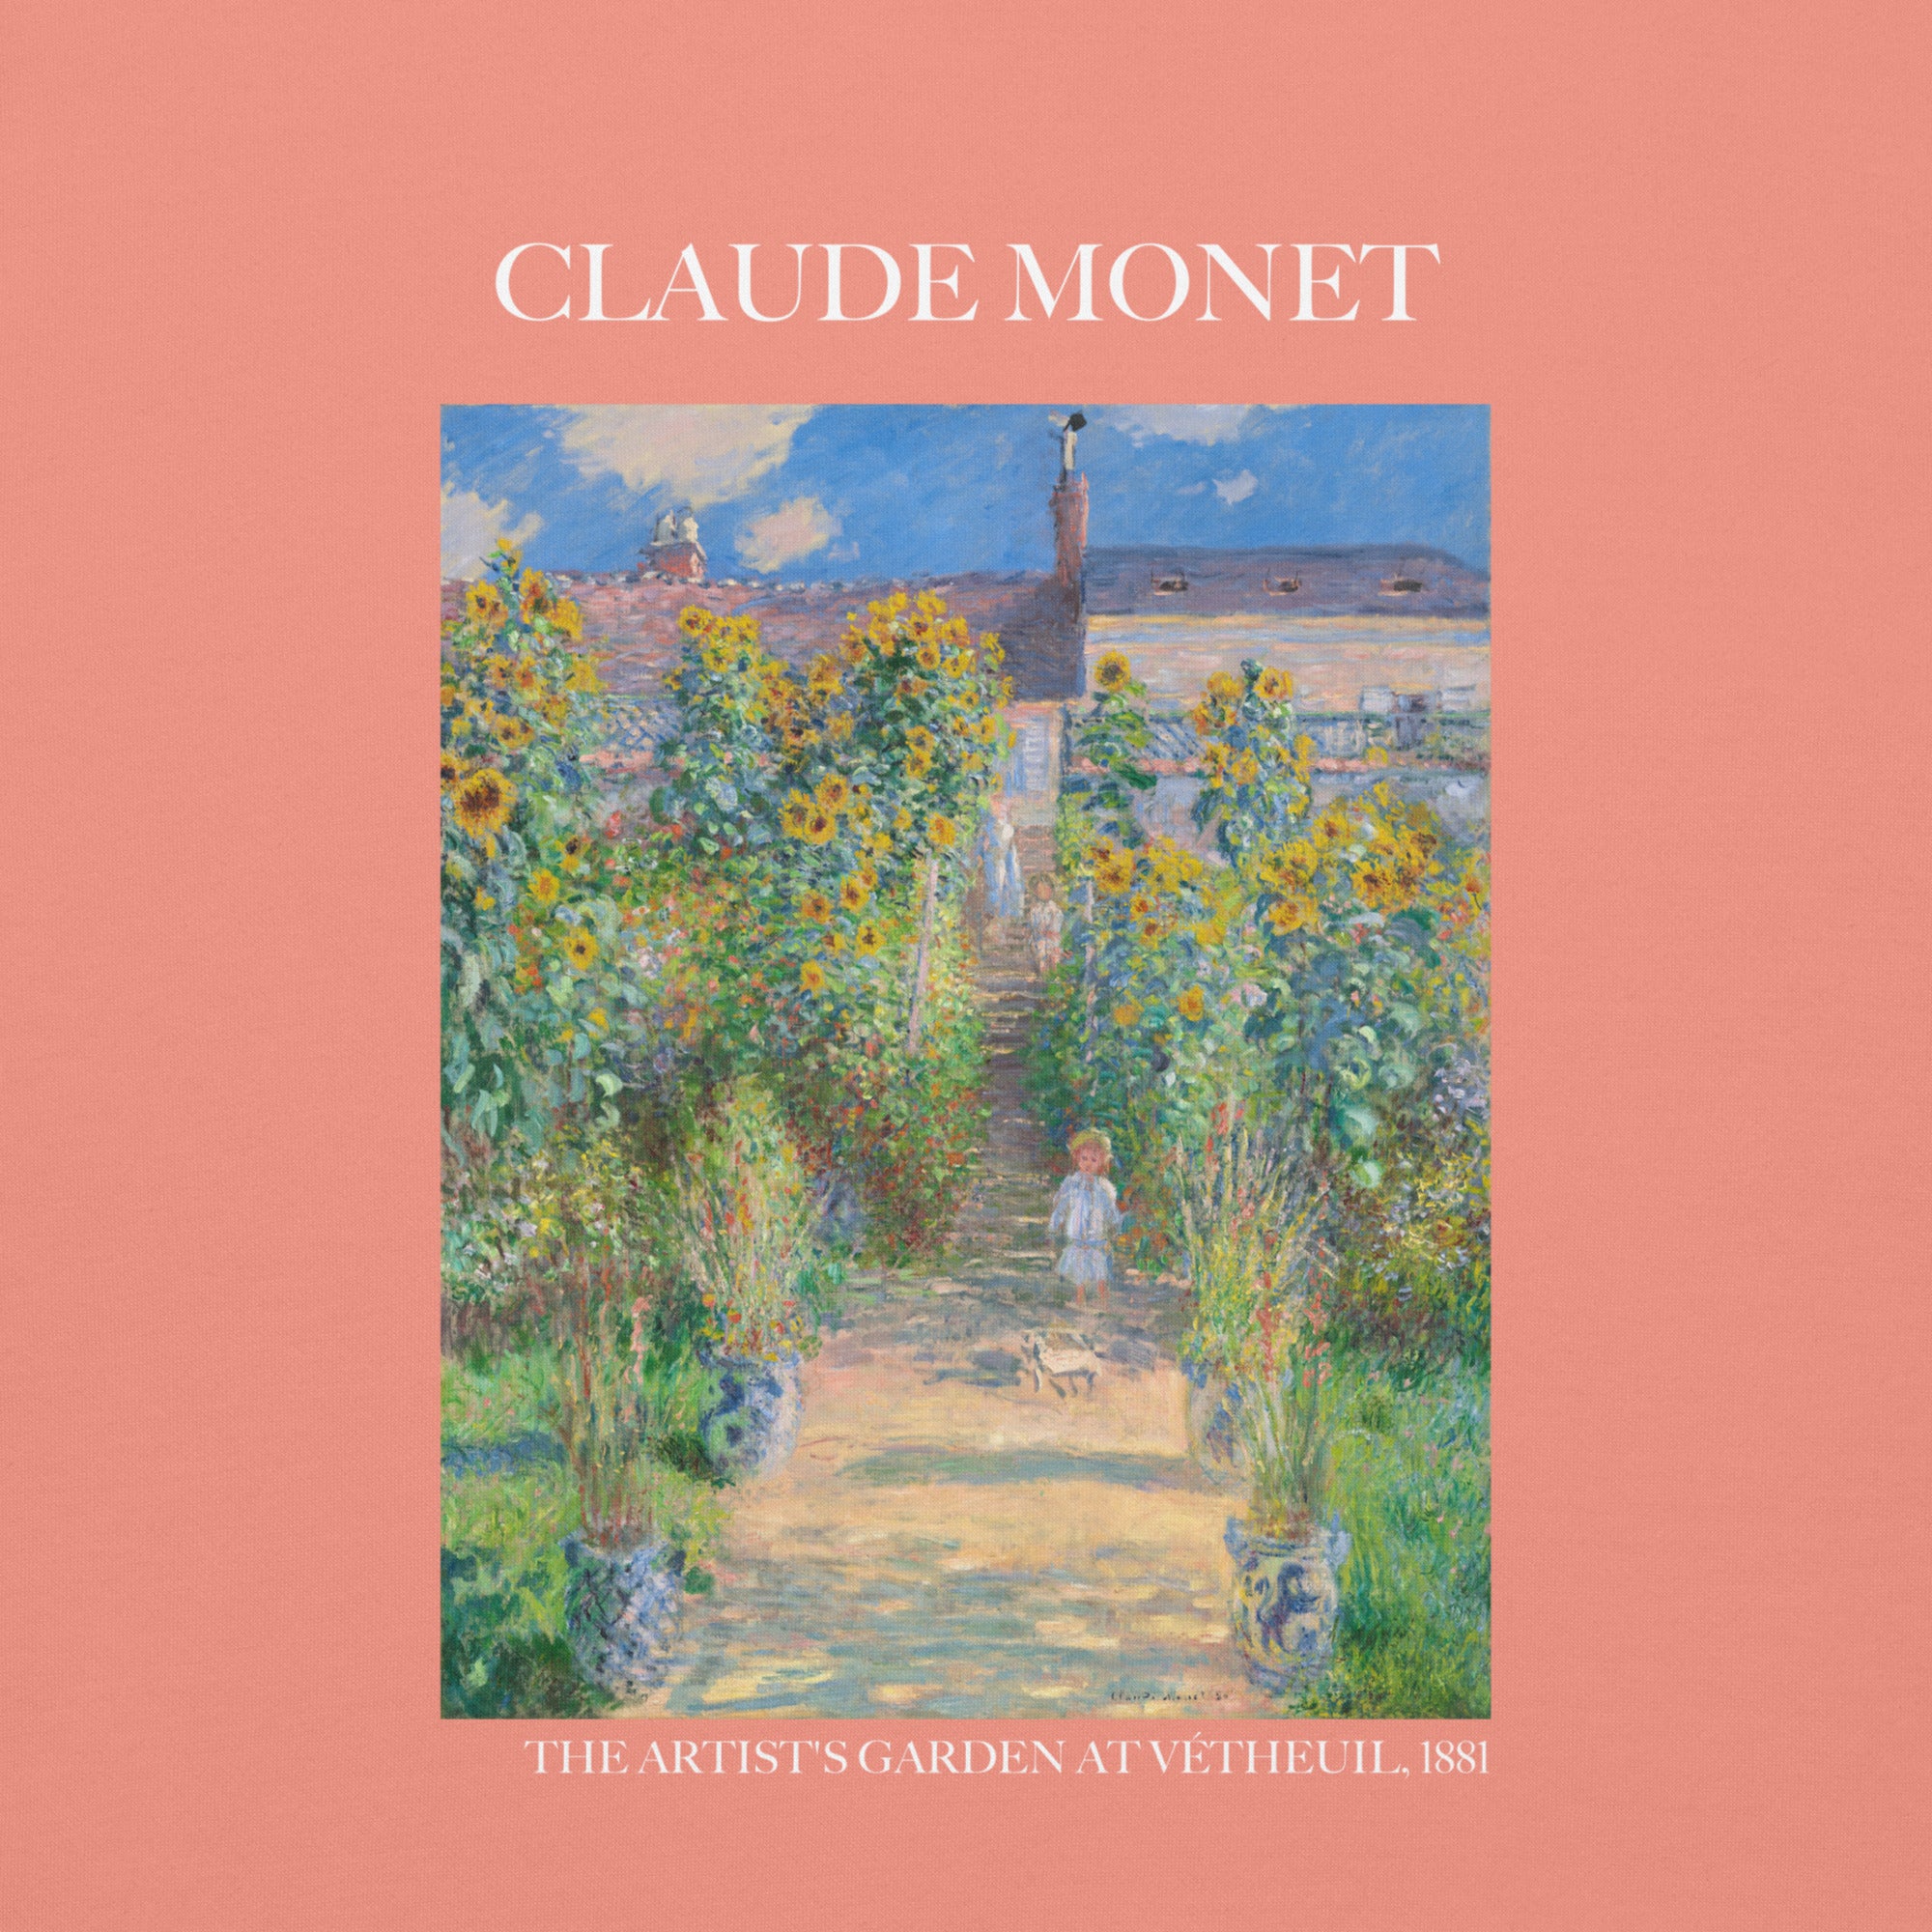 Claude Monet 'The Artist's Garden at Vétheuil' Famous Painting Sweatshirt | Unisex Premium Sweatshirt